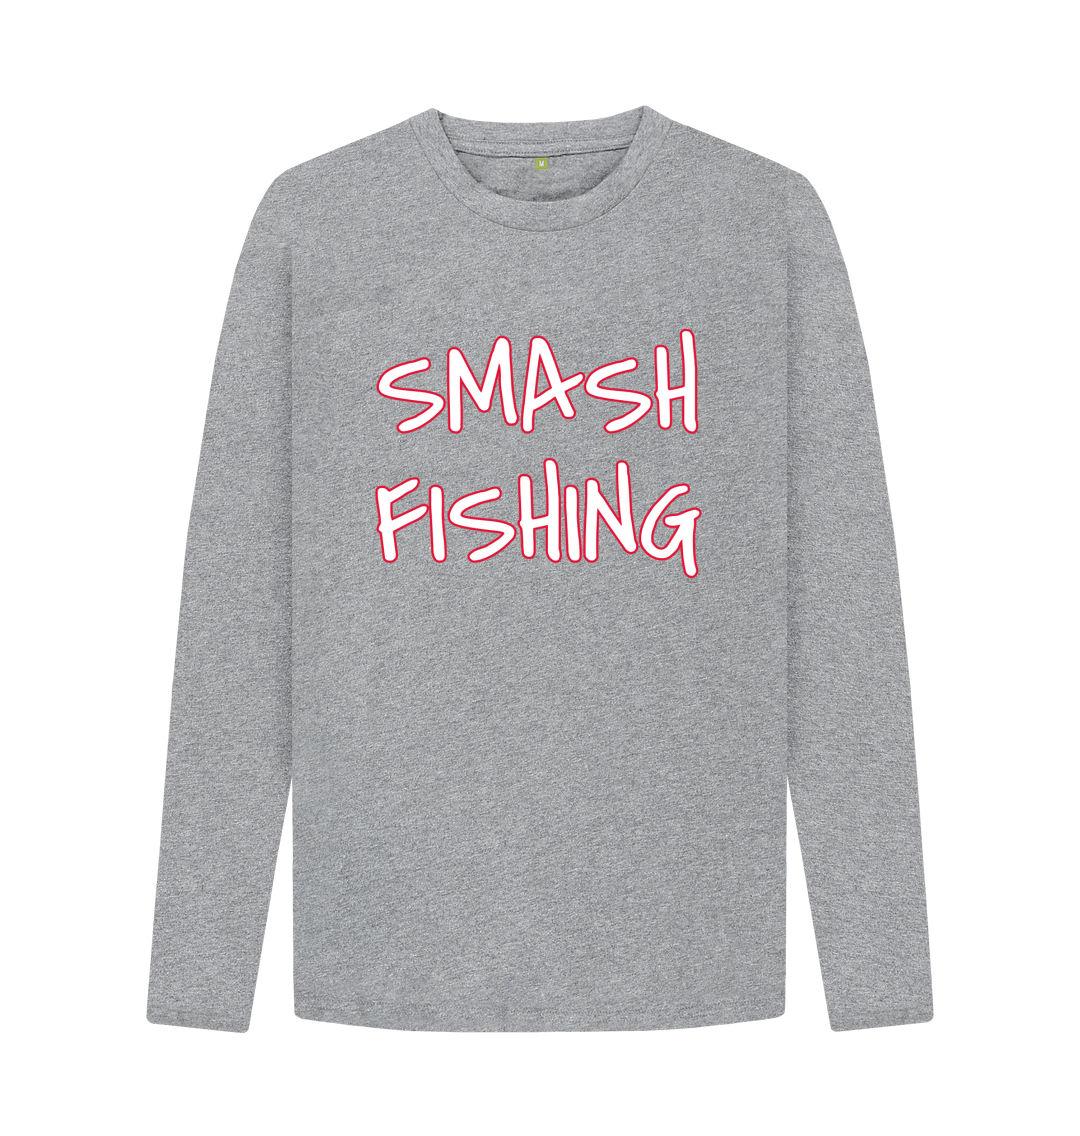 MEN'S SMASH FISHING T-SHIRT